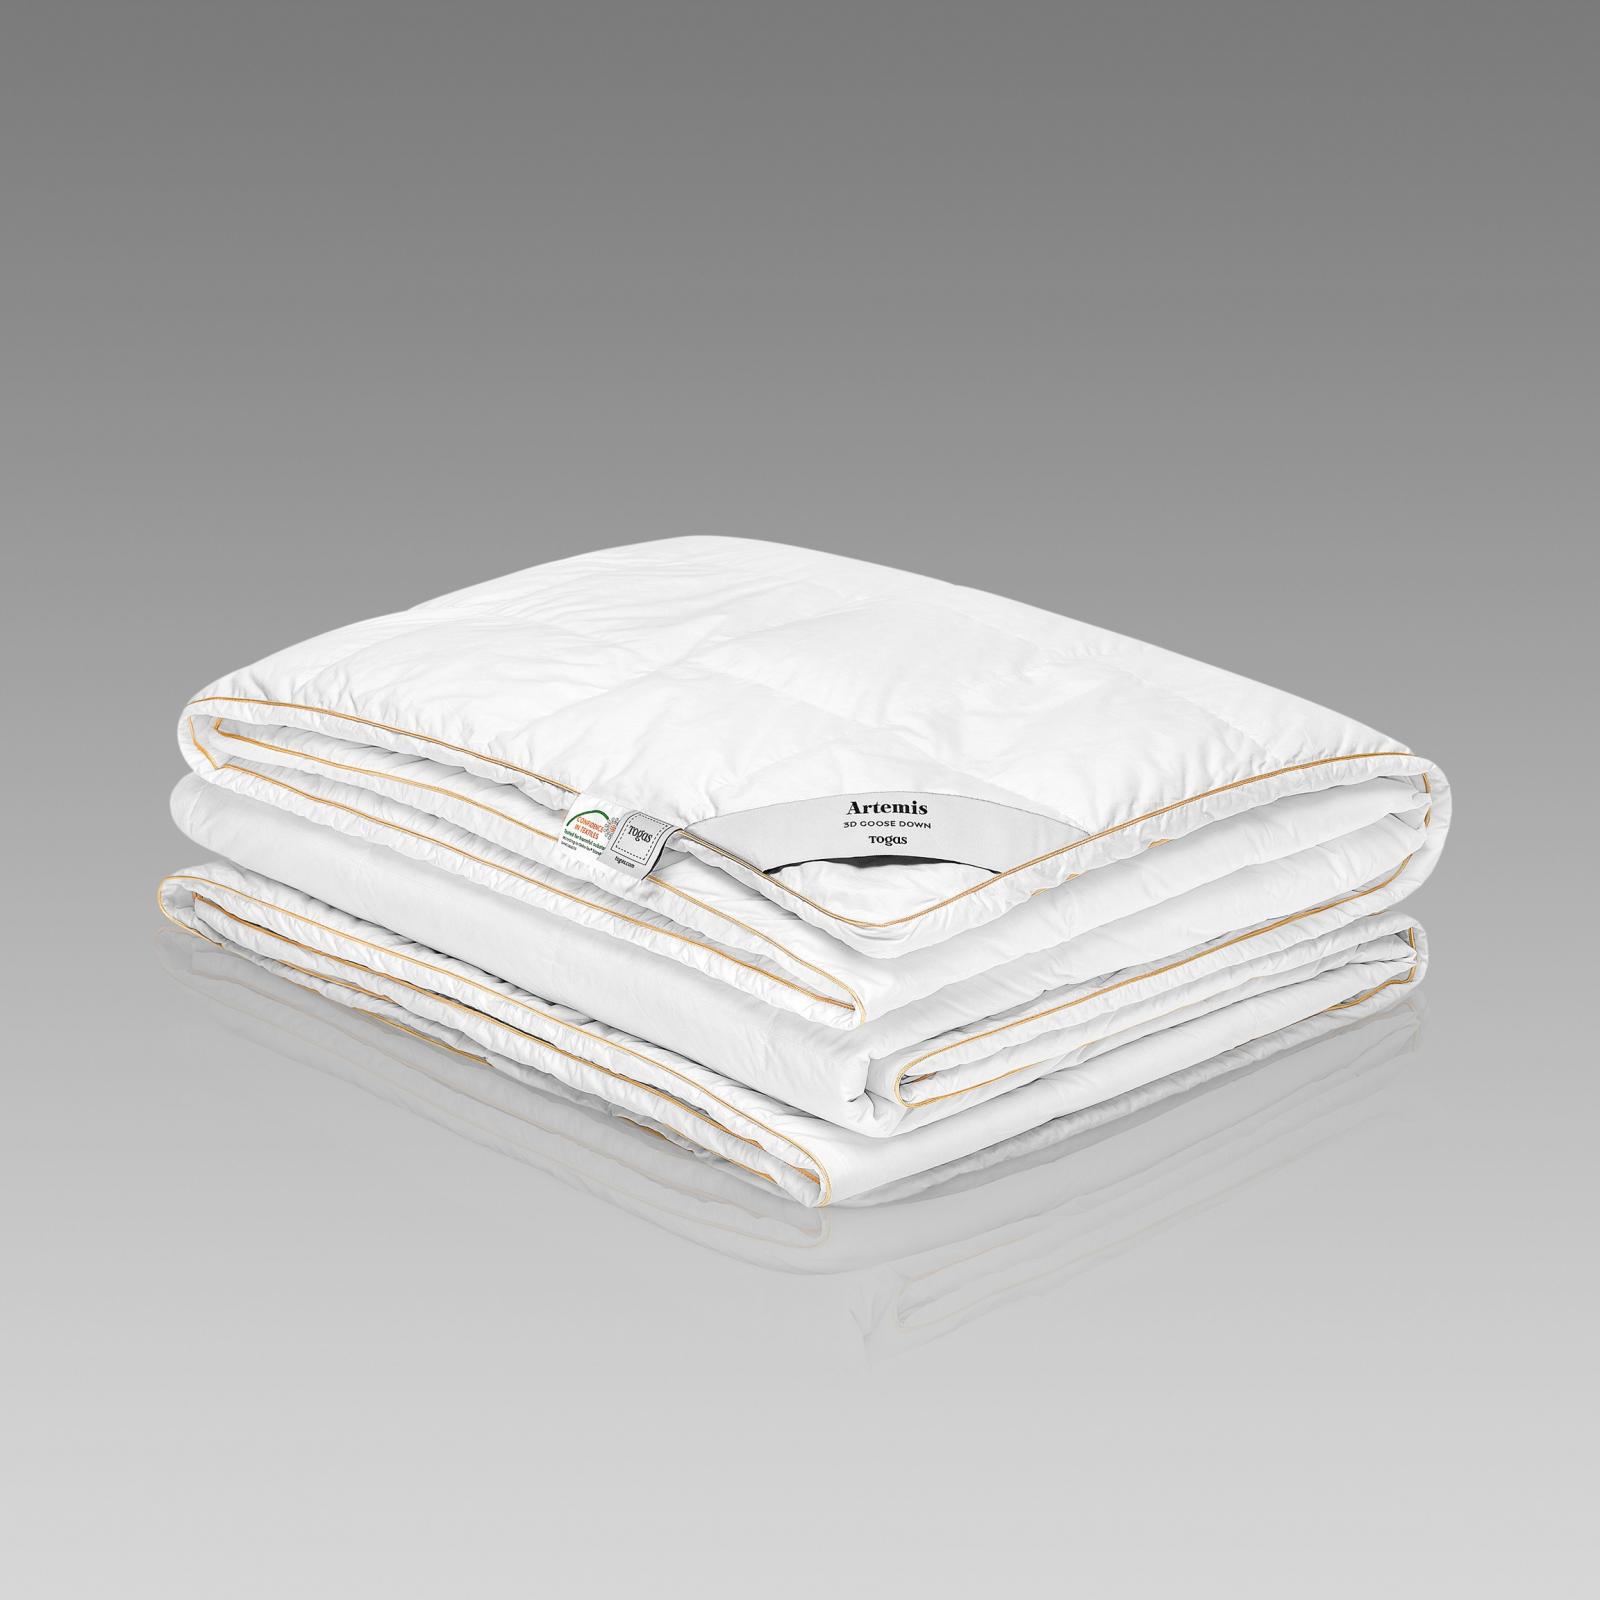 Одеяло Togas Артемис белое 240х260 см одеяло medsleep nubi белое 175х200 см